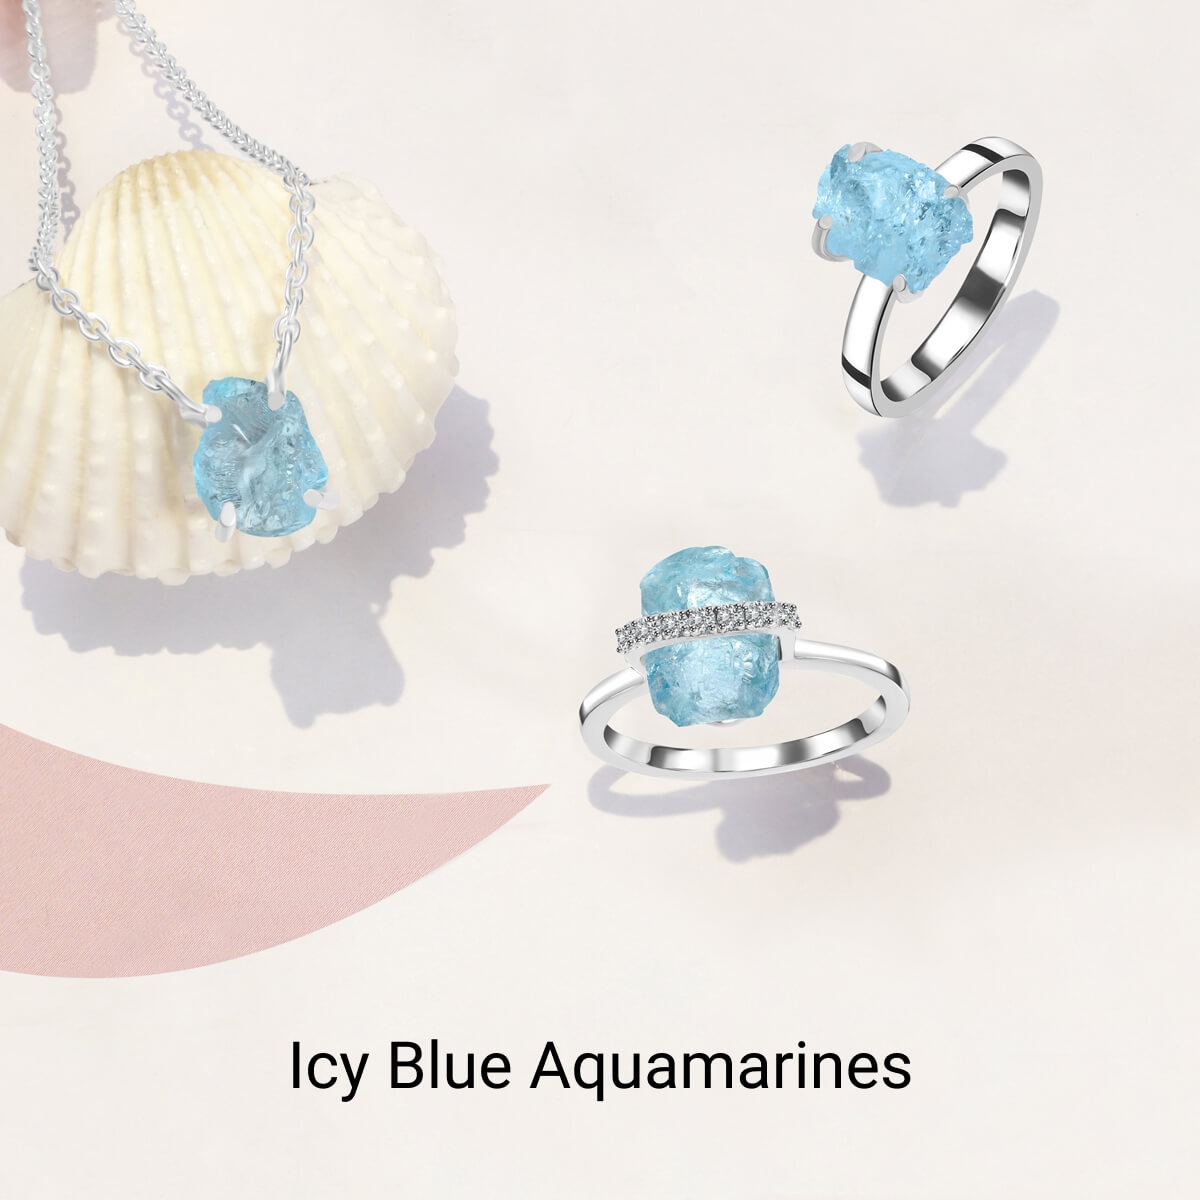 Icy Blue Aquamarine Jewelry